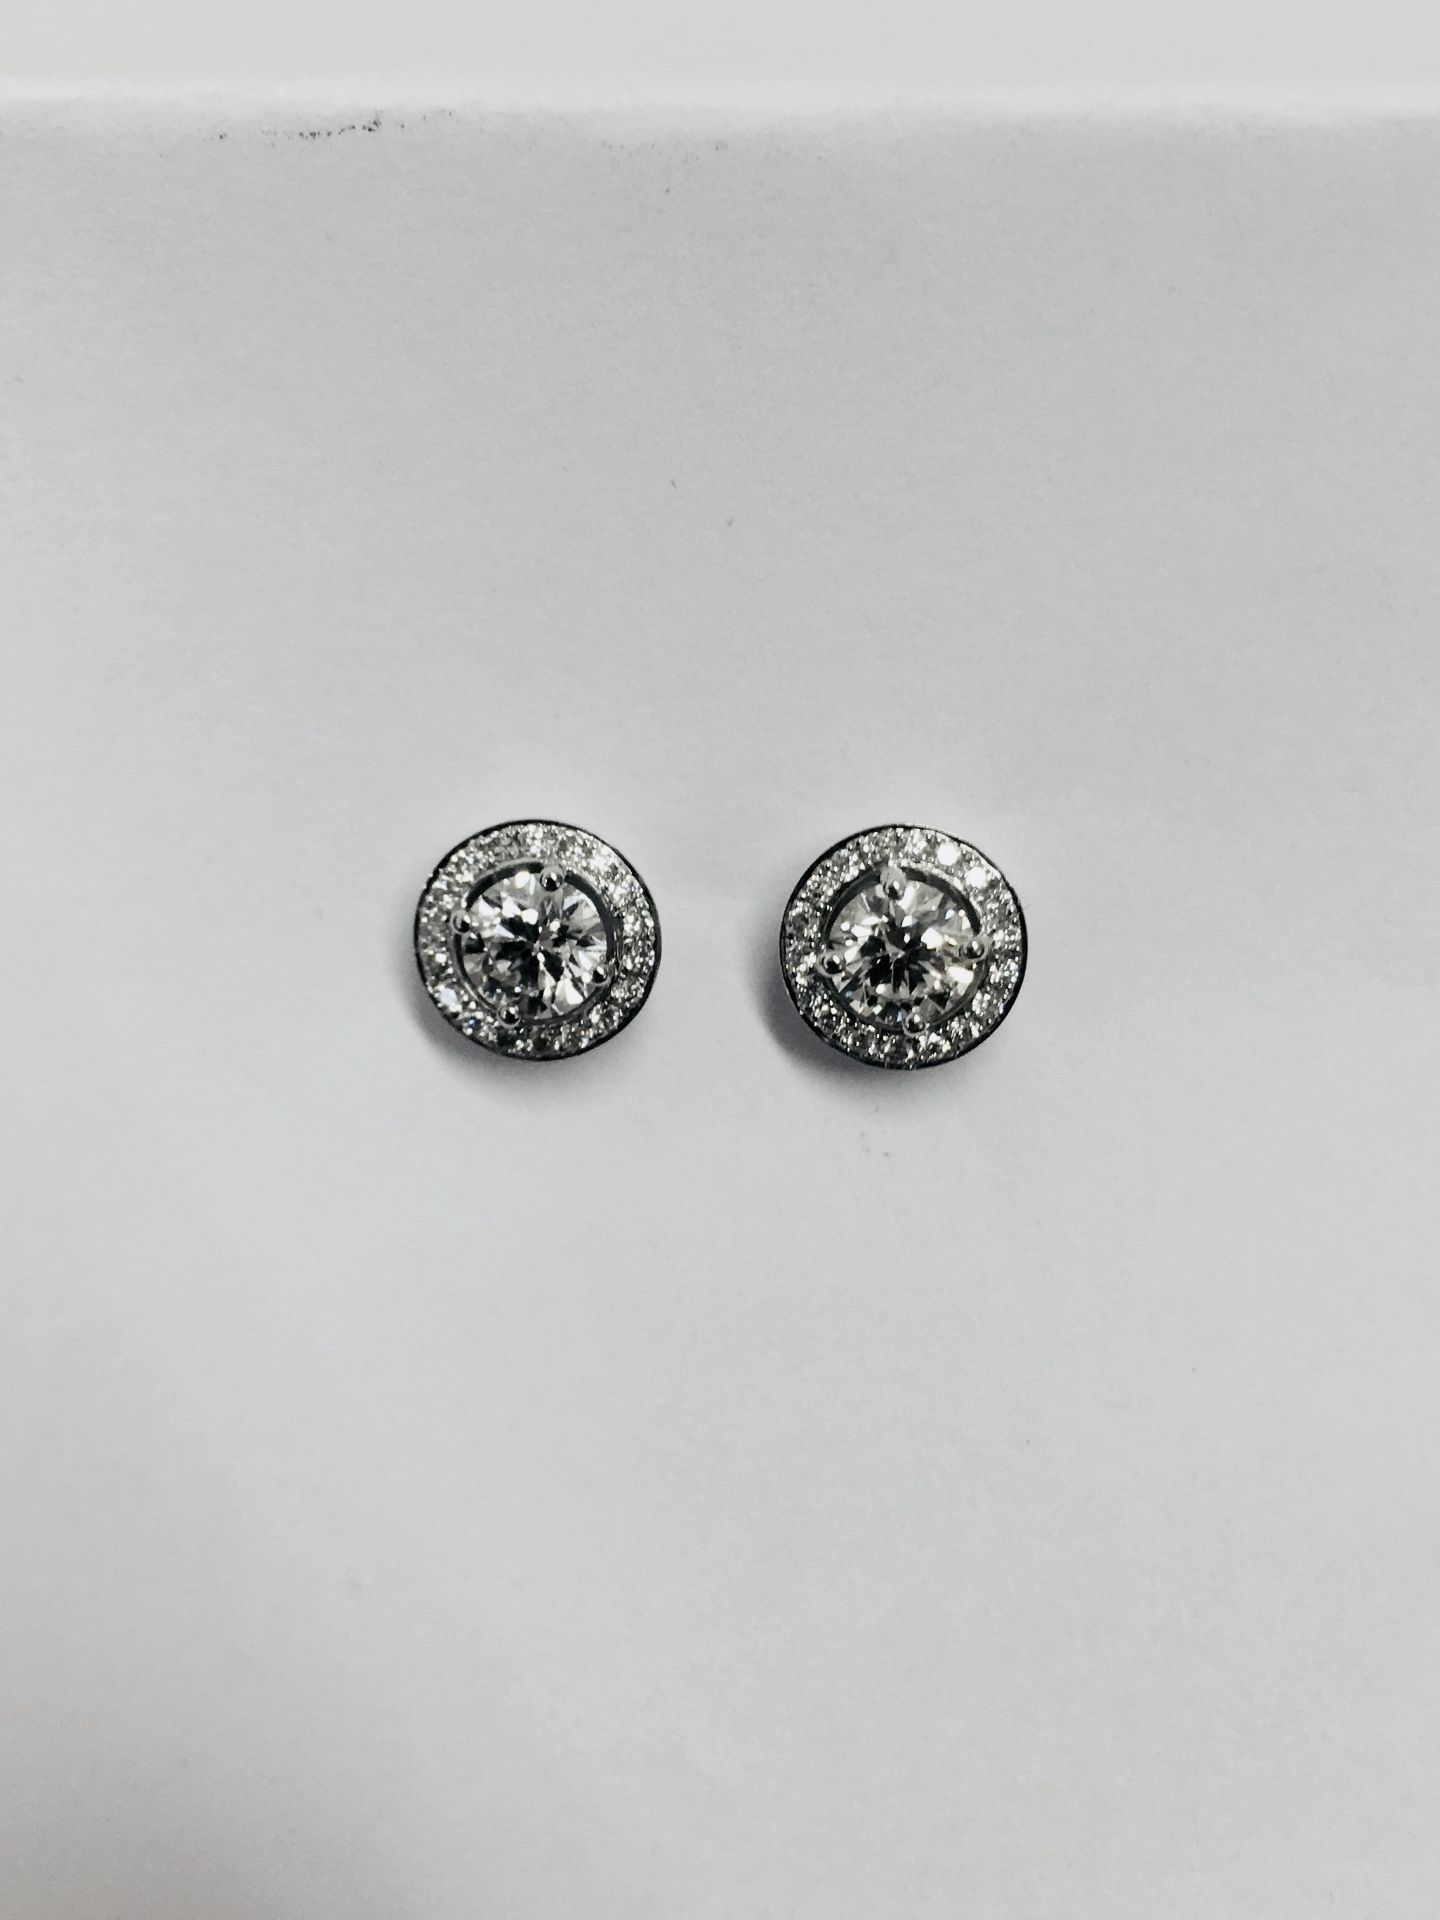 1ct diamond stud earrings ,h colour vs clarity halo set ,18ct white 3.2gms heavy mounts diamond - Image 4 of 4